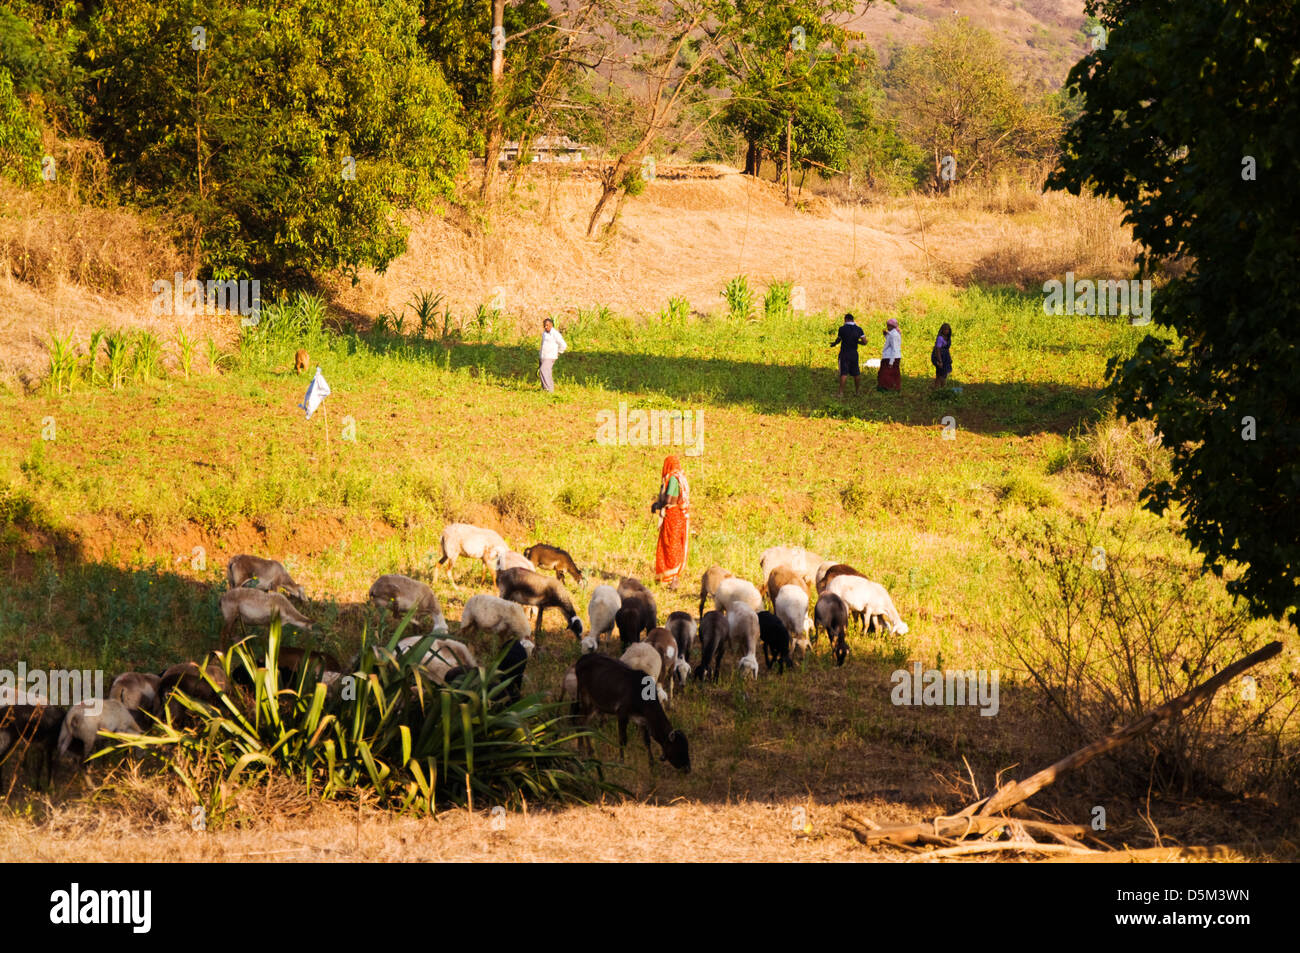 Rural Indian farming community in Khubalivali Village Mulshi Valley Paud Maharashtra India Stock Photo